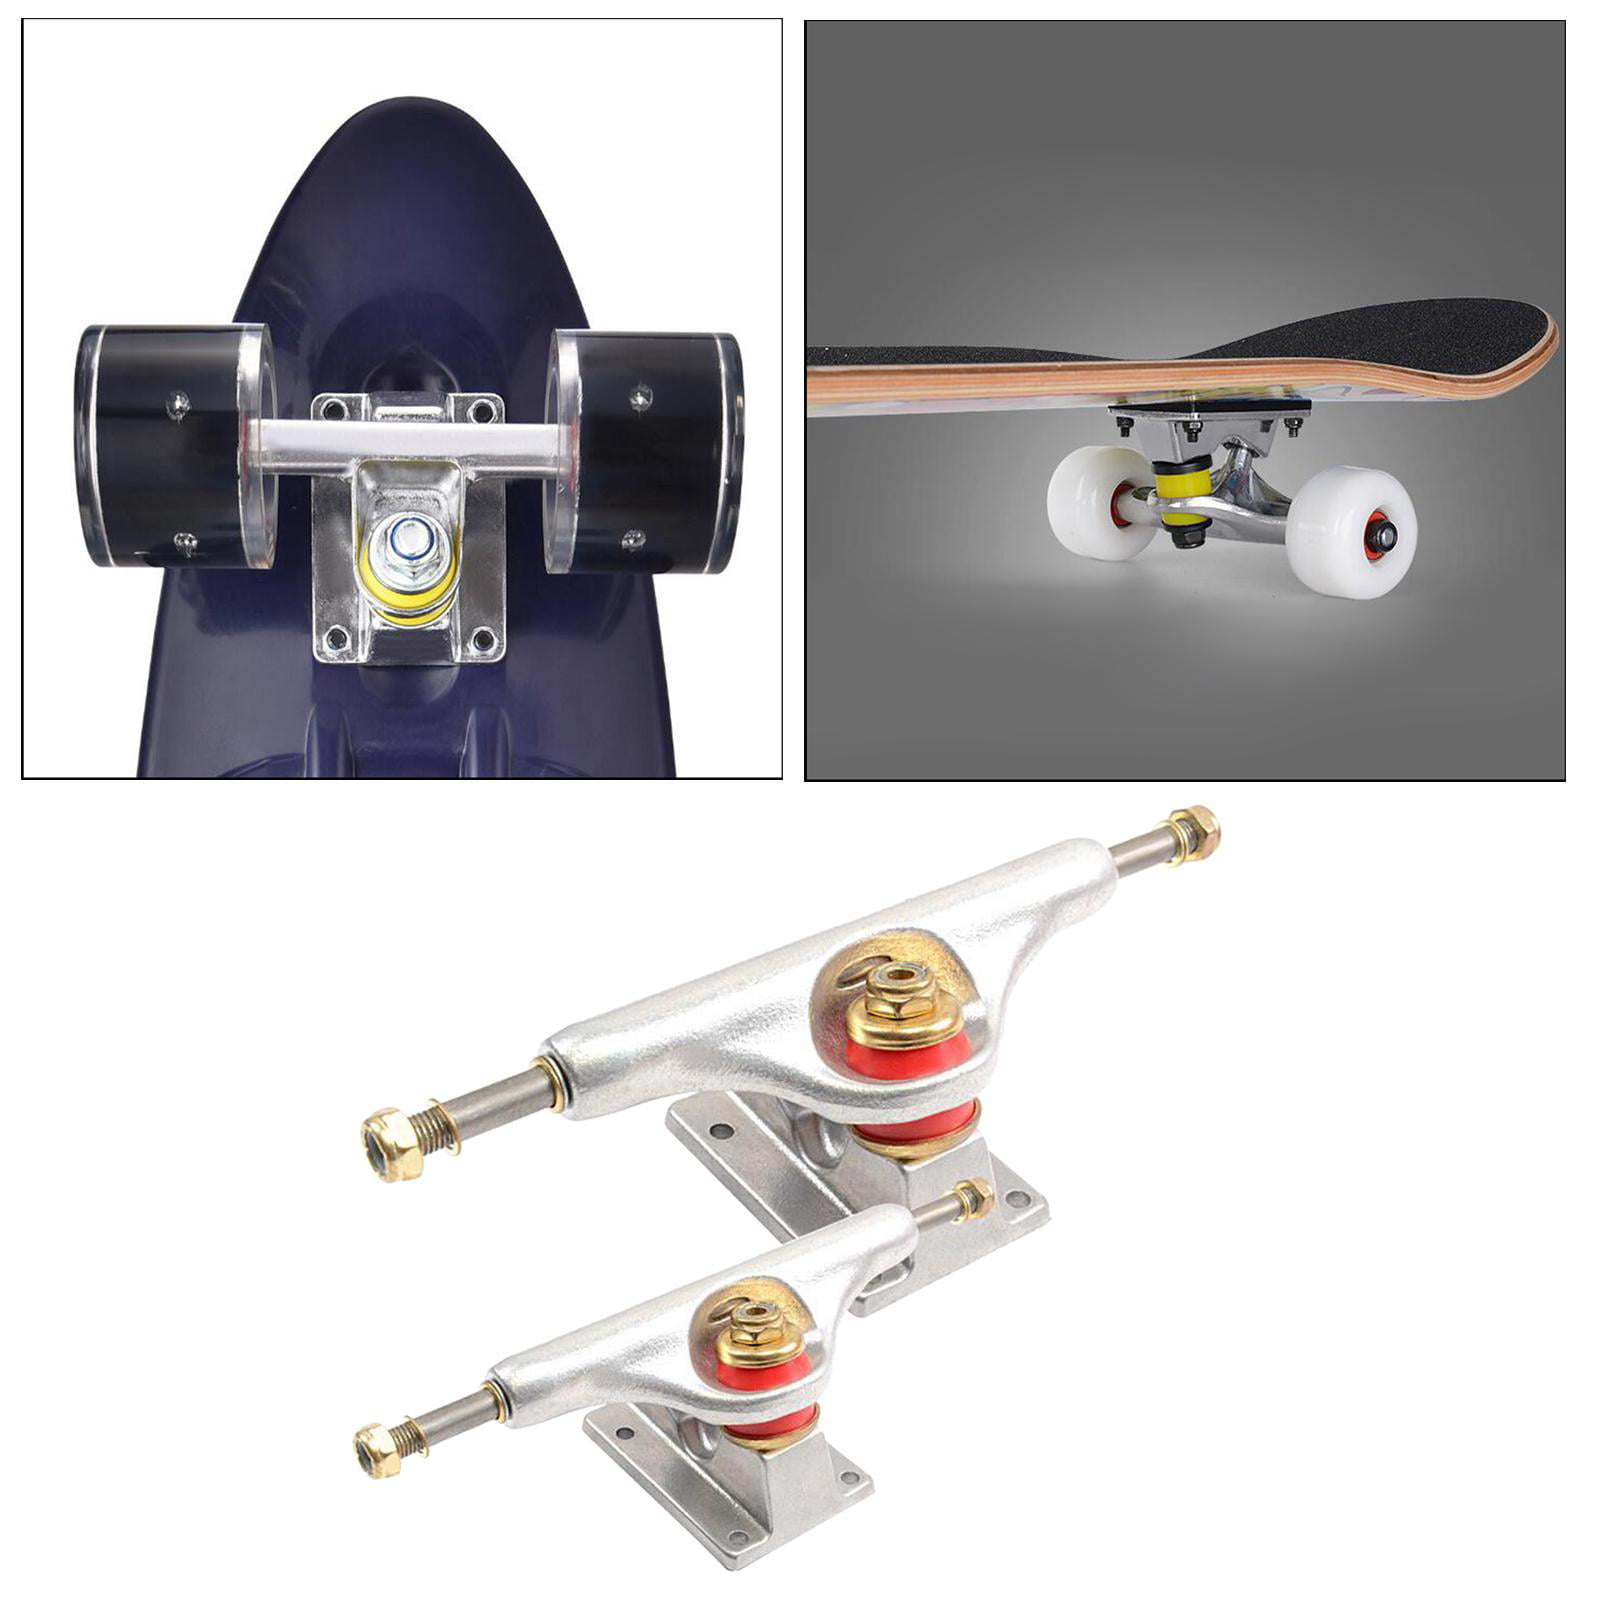 Details about   Skateboard Trucks Bushings Mounting Hardware for Skate Board Cruise Truck 